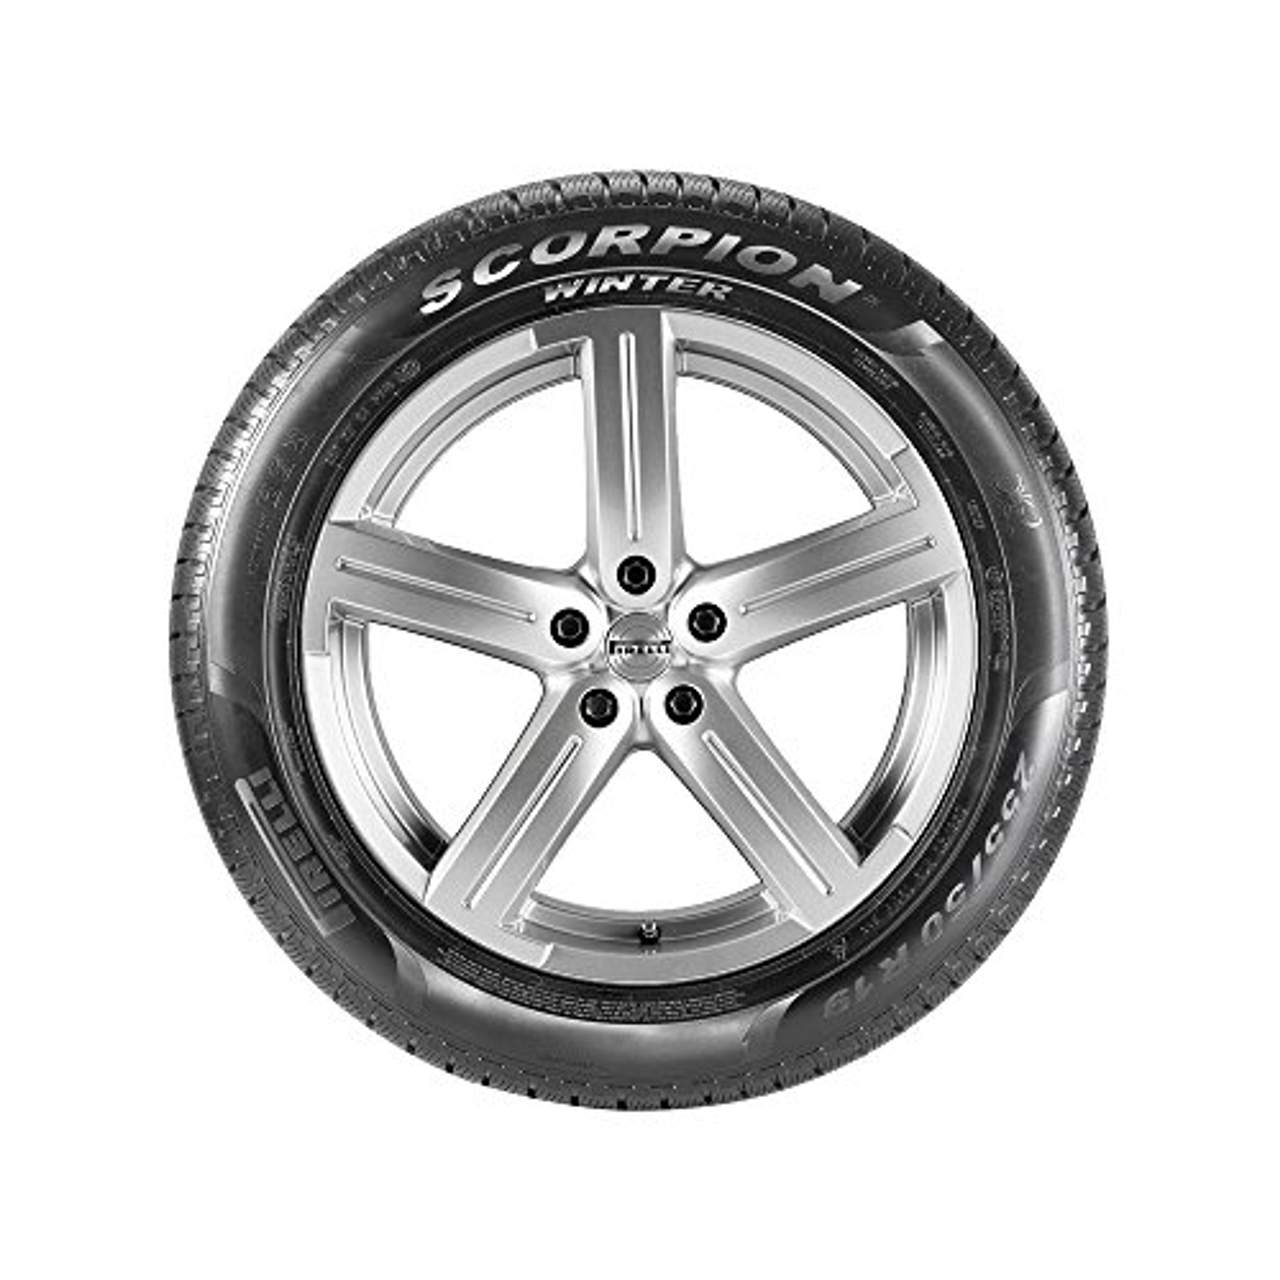 Pirelli SCORPION WINTER 255/55 R18